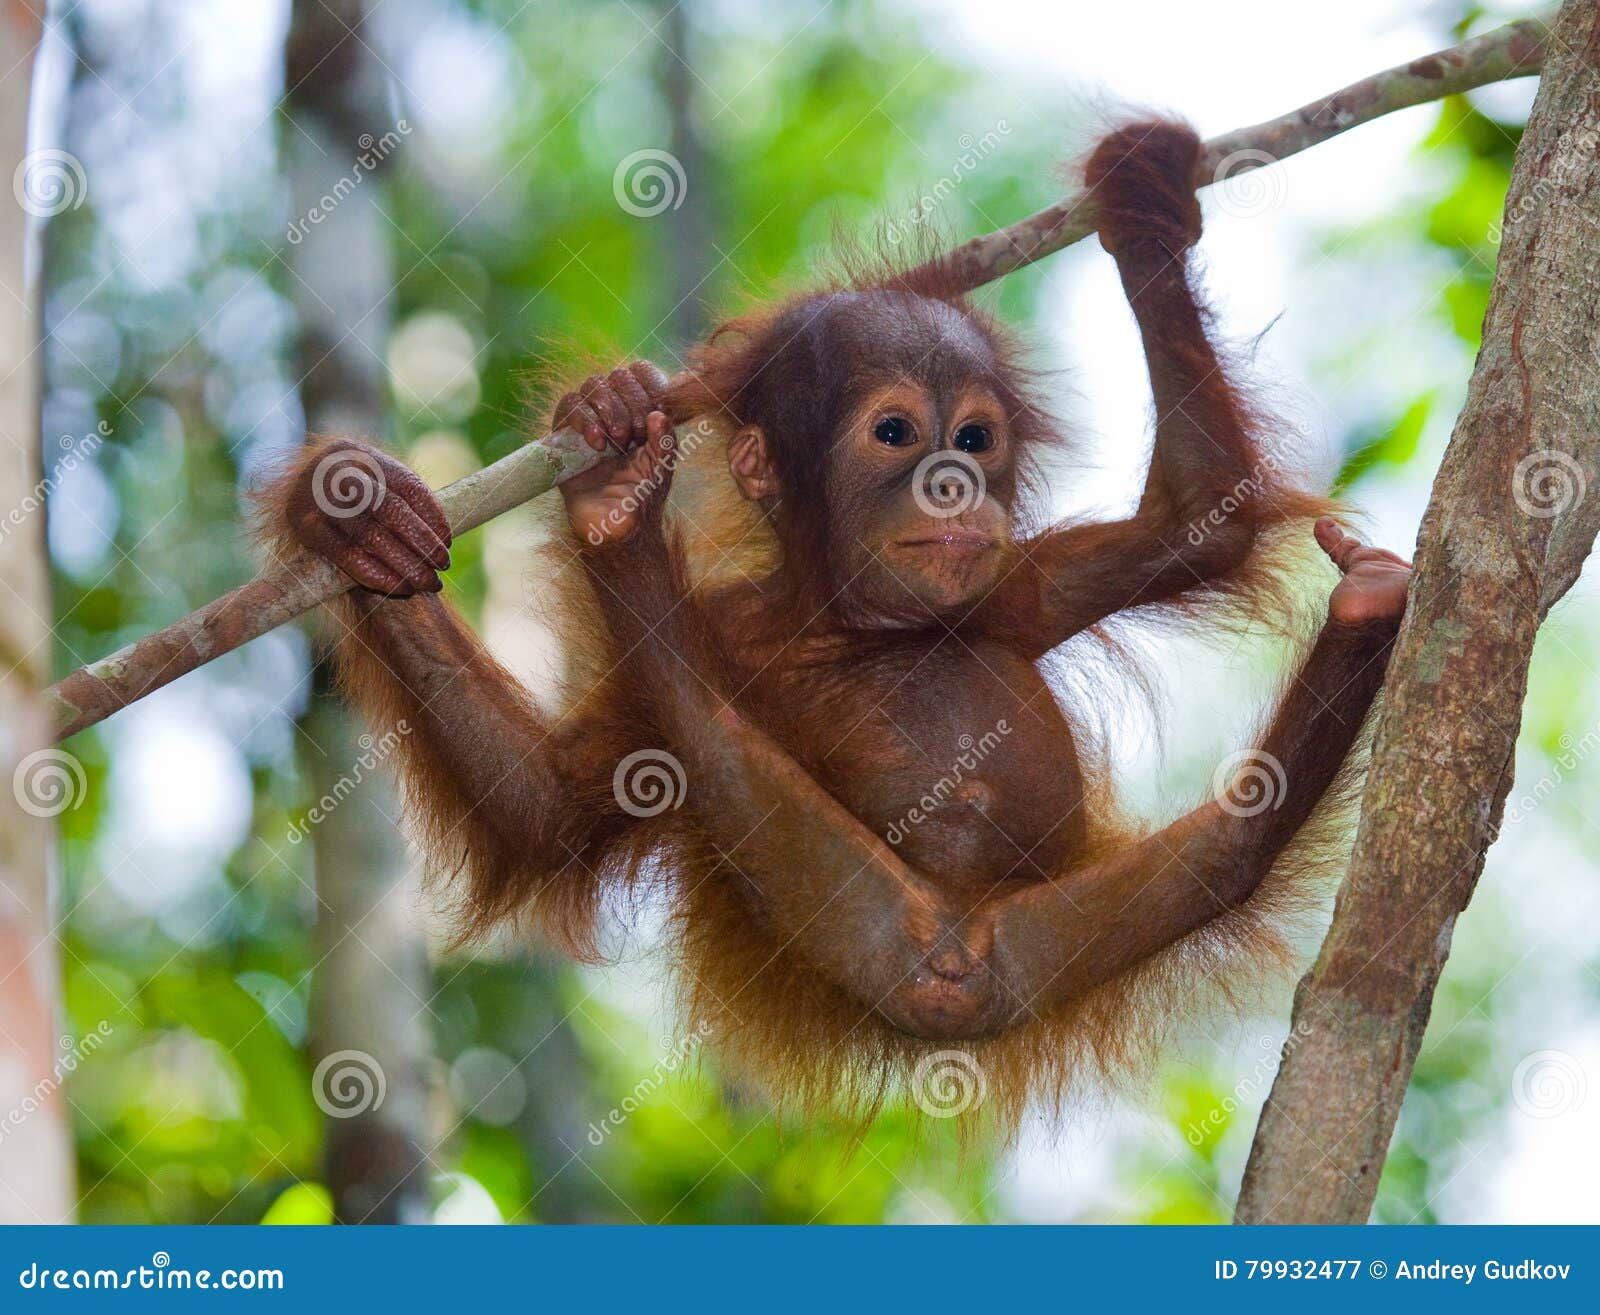 A Baby Orangutan in the Wild. Indonesia. the Island of Kalimantan